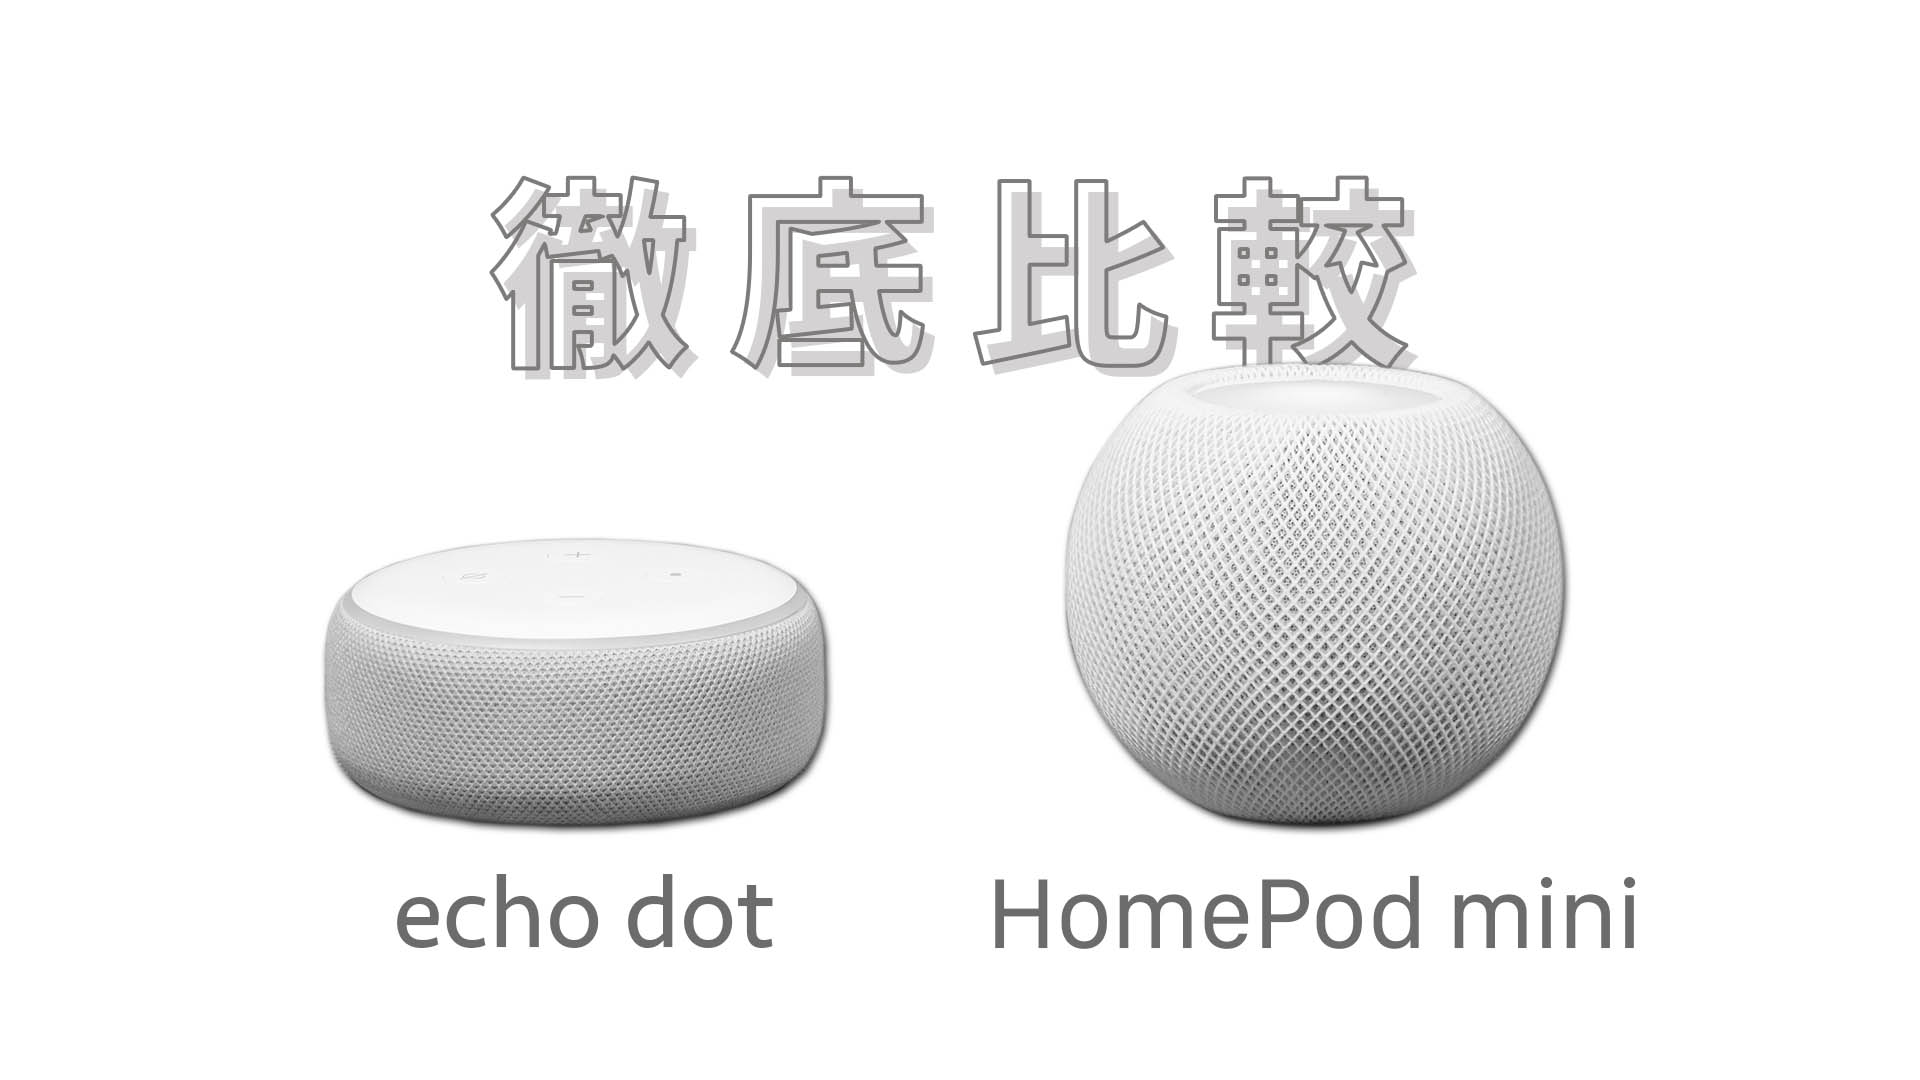 HomePod miniとecho dotを徹底比較。自分に合う一台を見つけるためには